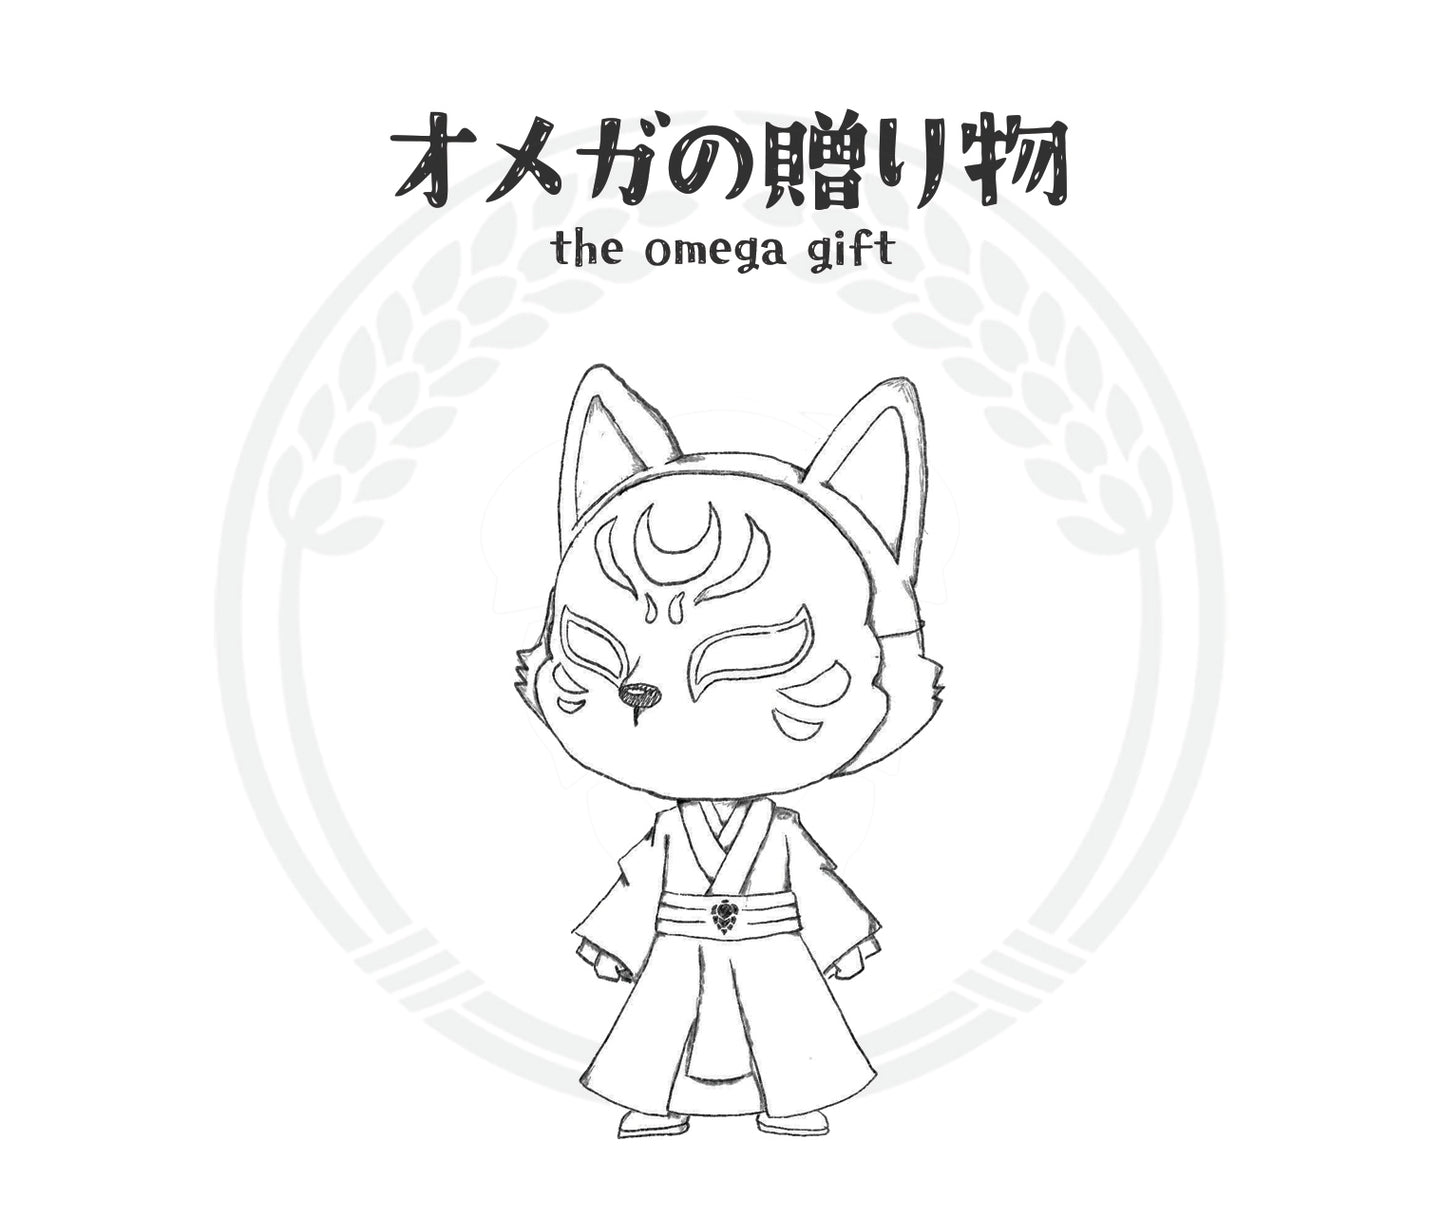 The Omega Gift